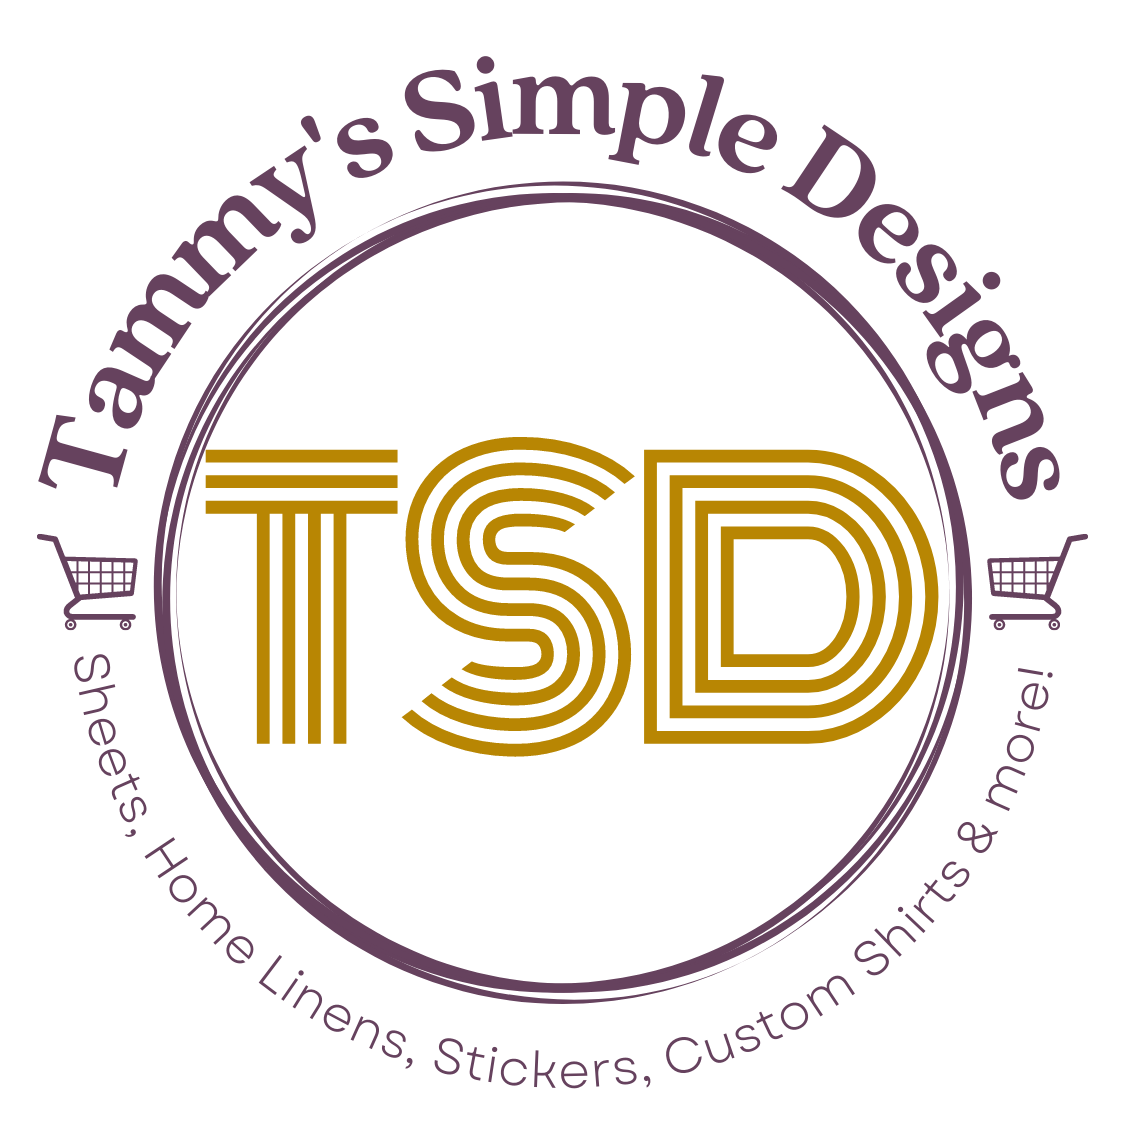 Tammy's Simple Designs